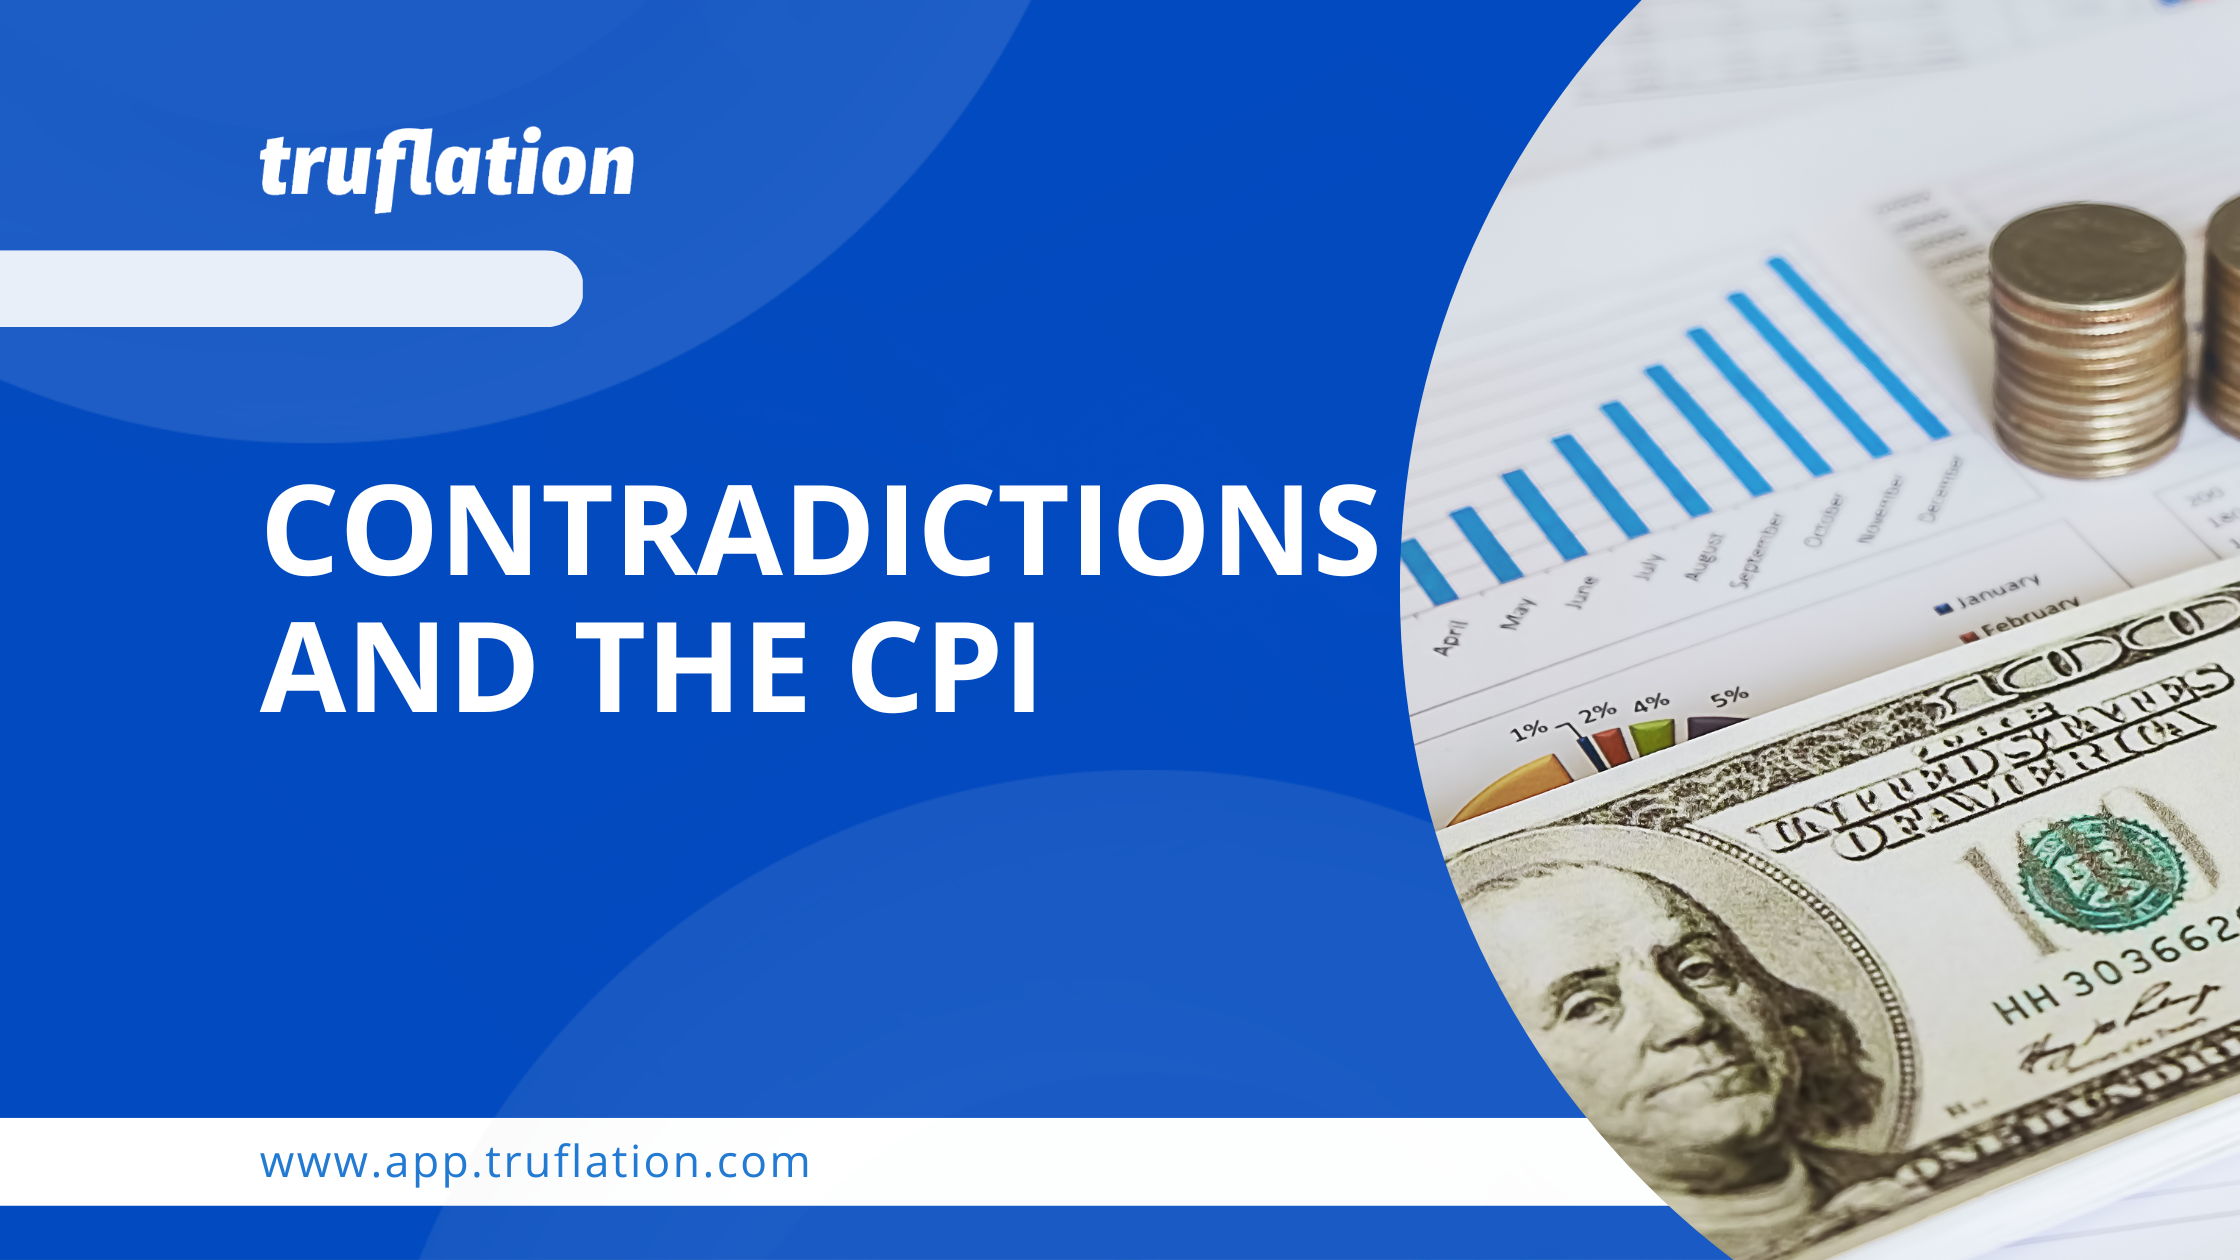 Truflation: Contradictions & the CPI